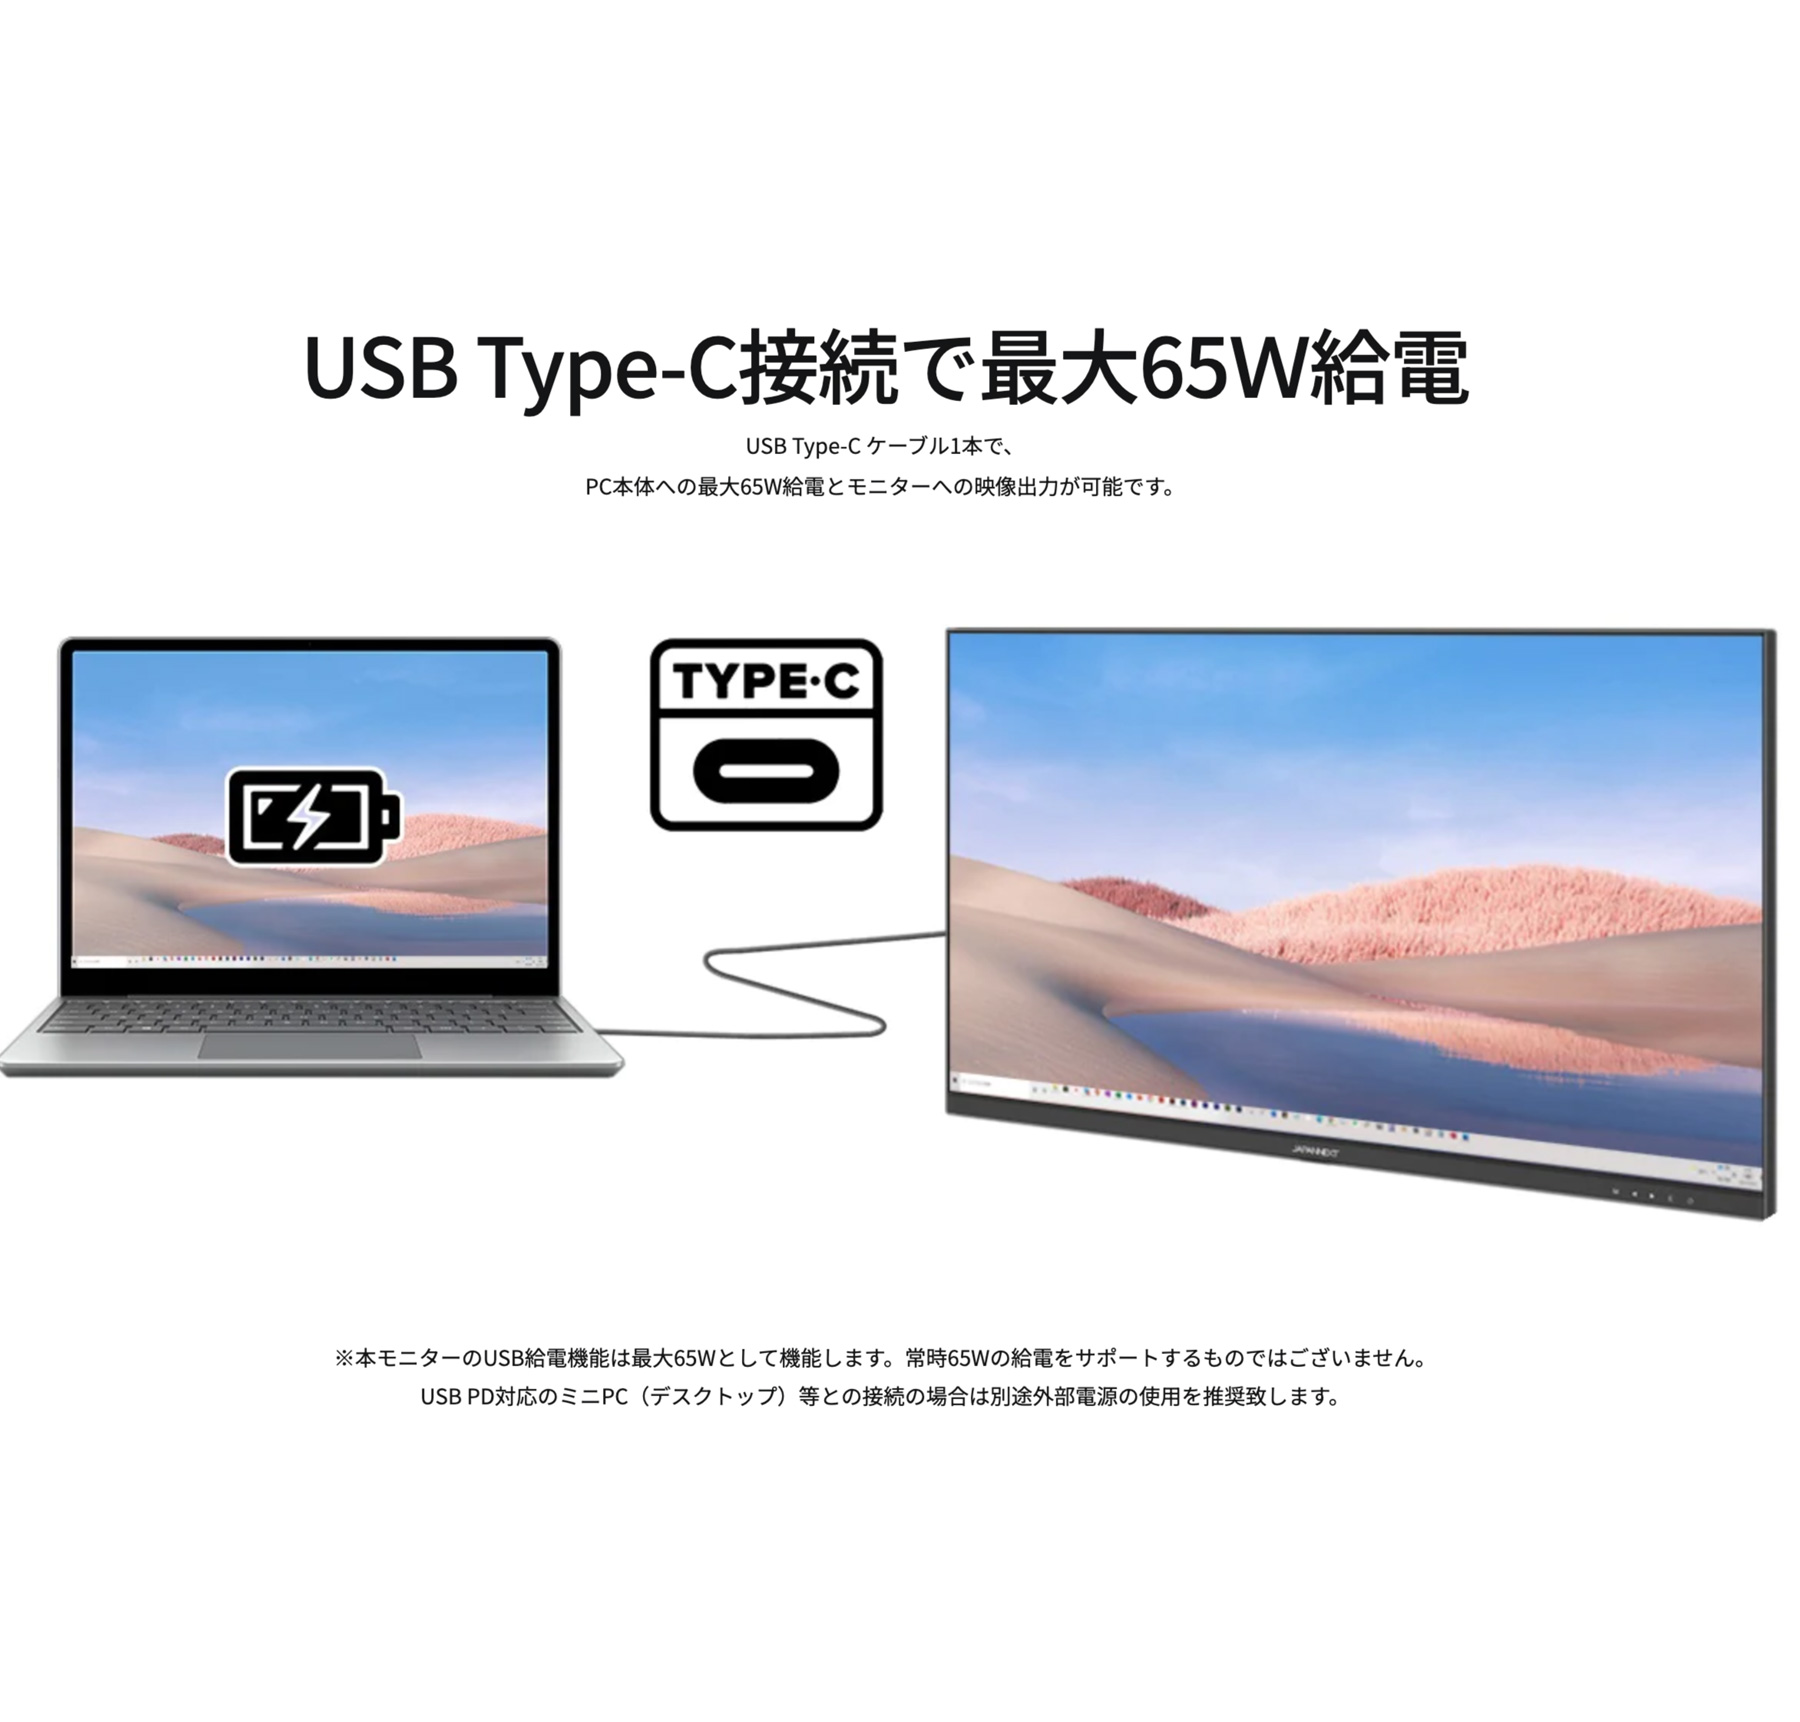 JAPANNEXT 49インチ曲面IPSパネル Dual WQHD(5120x1440)解像度 超 